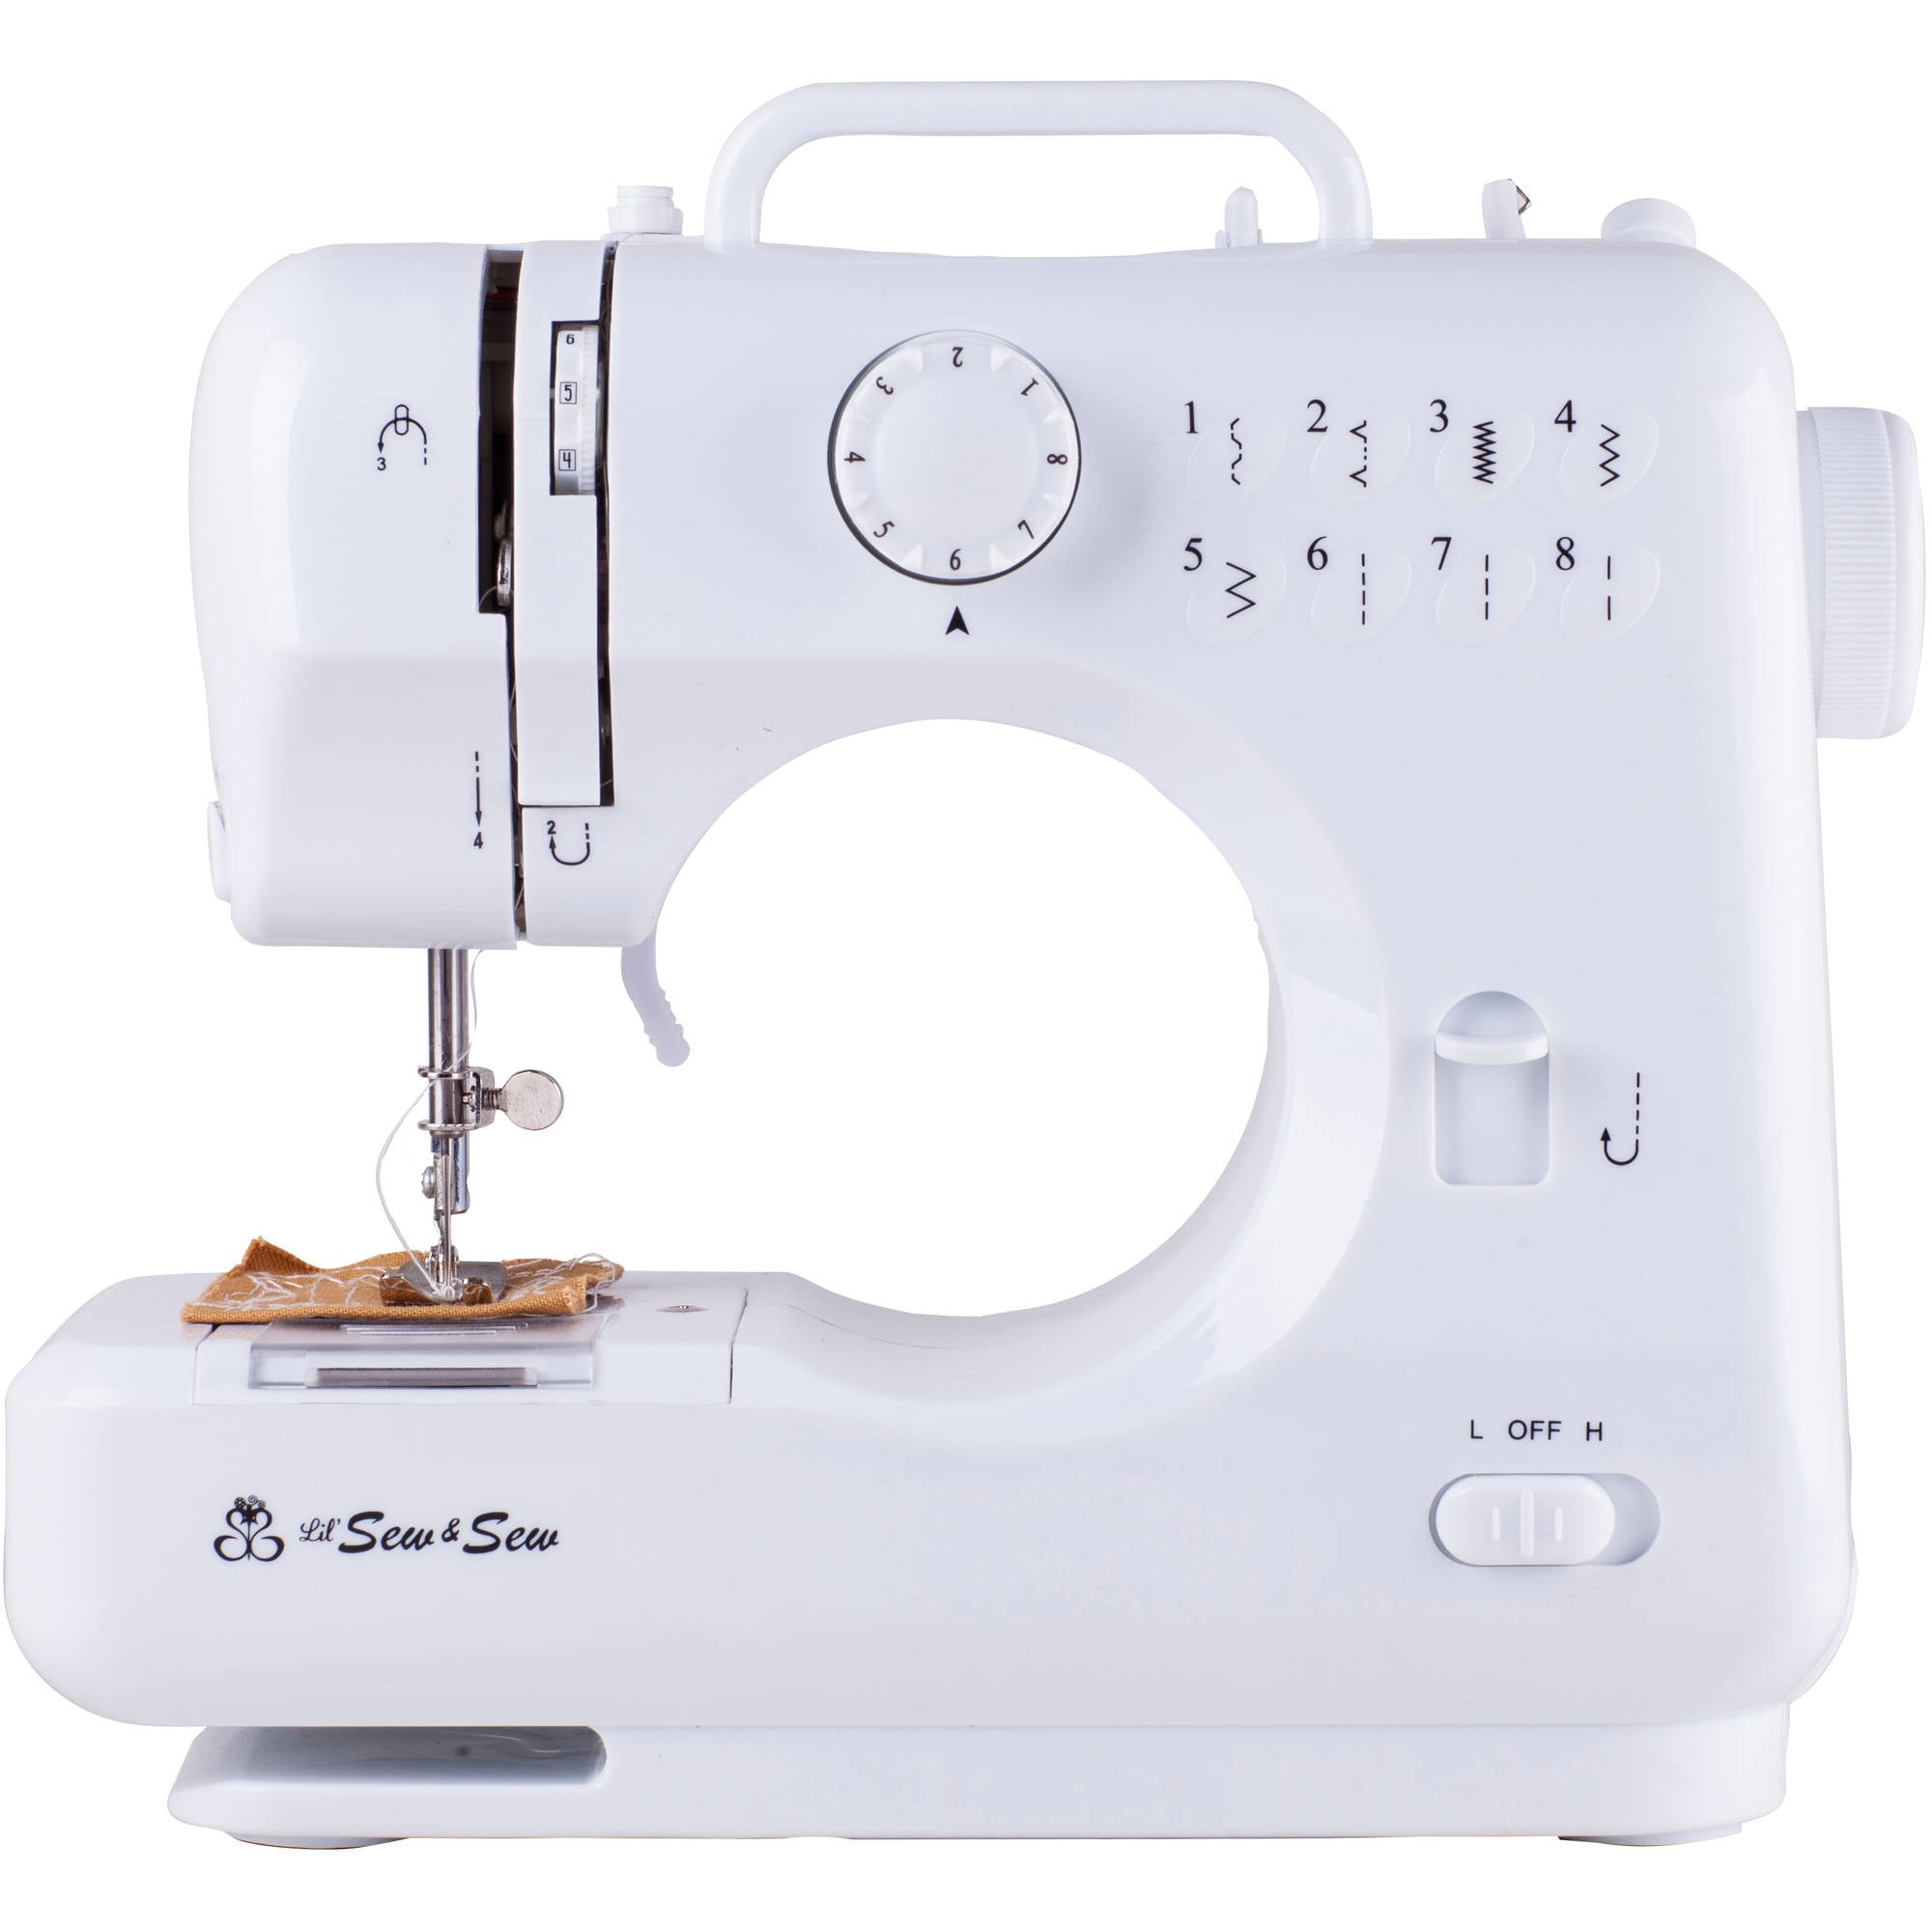 Michley® Handheld Sewing Machine.